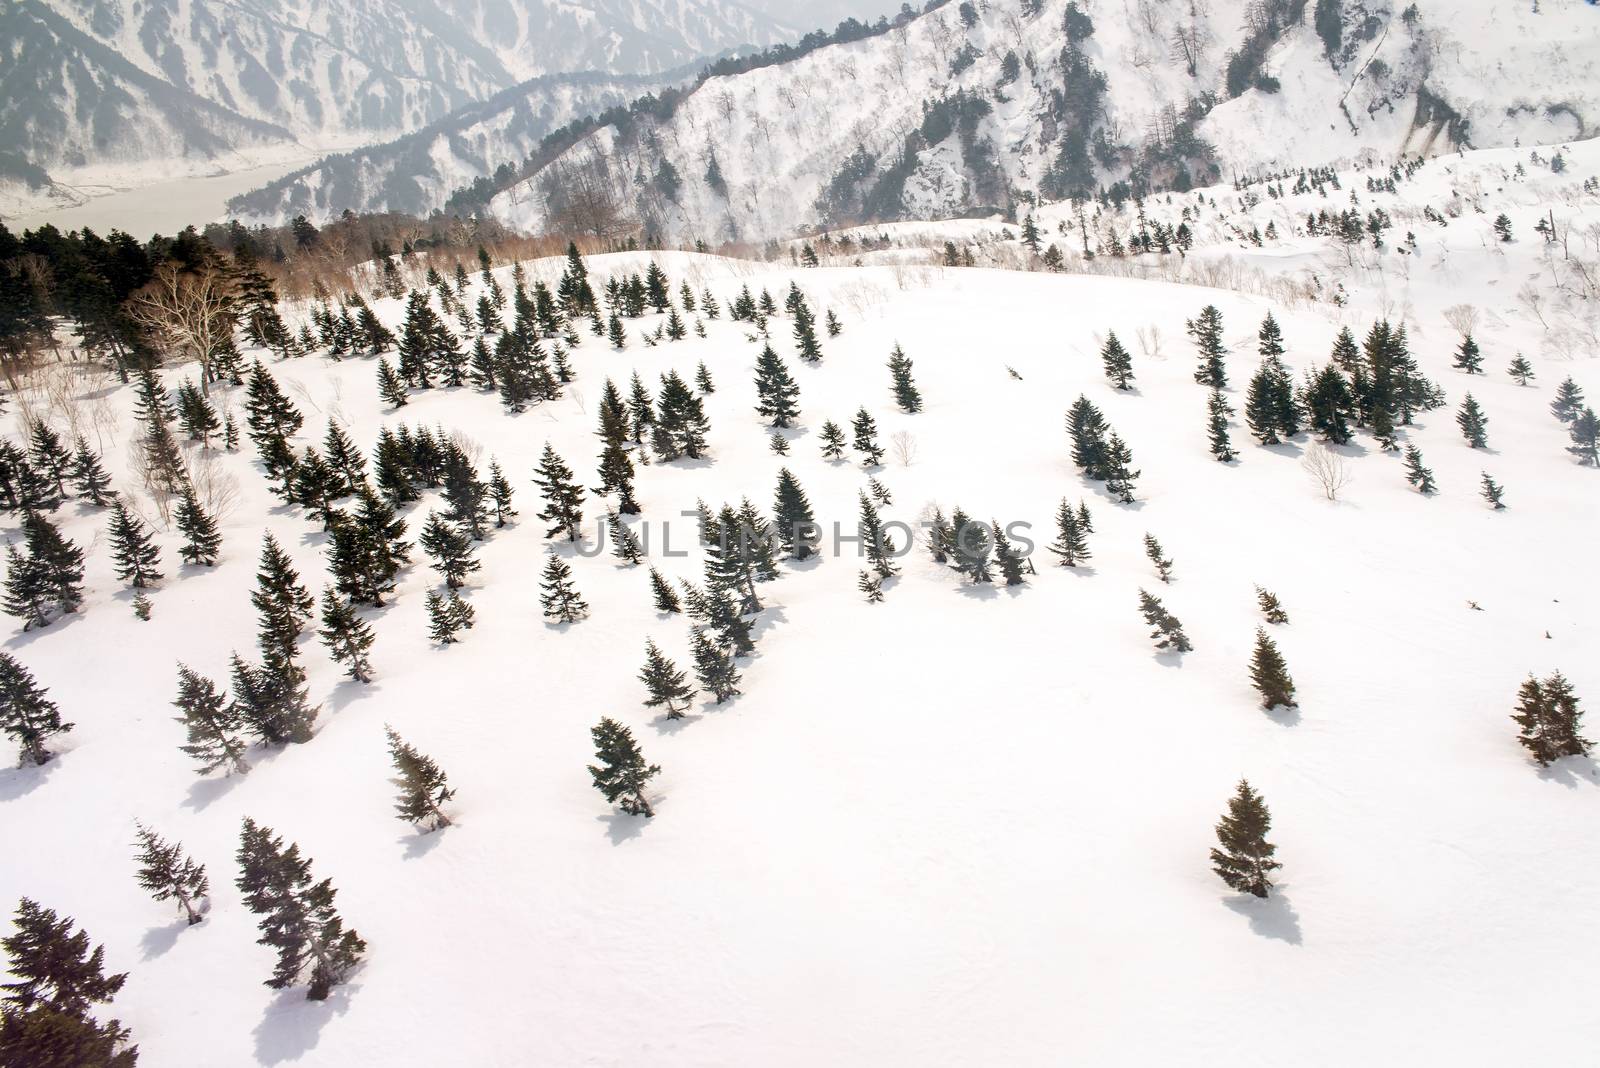 Japan Alps , Winter moutains with snow.Takayama Gifu, Japan